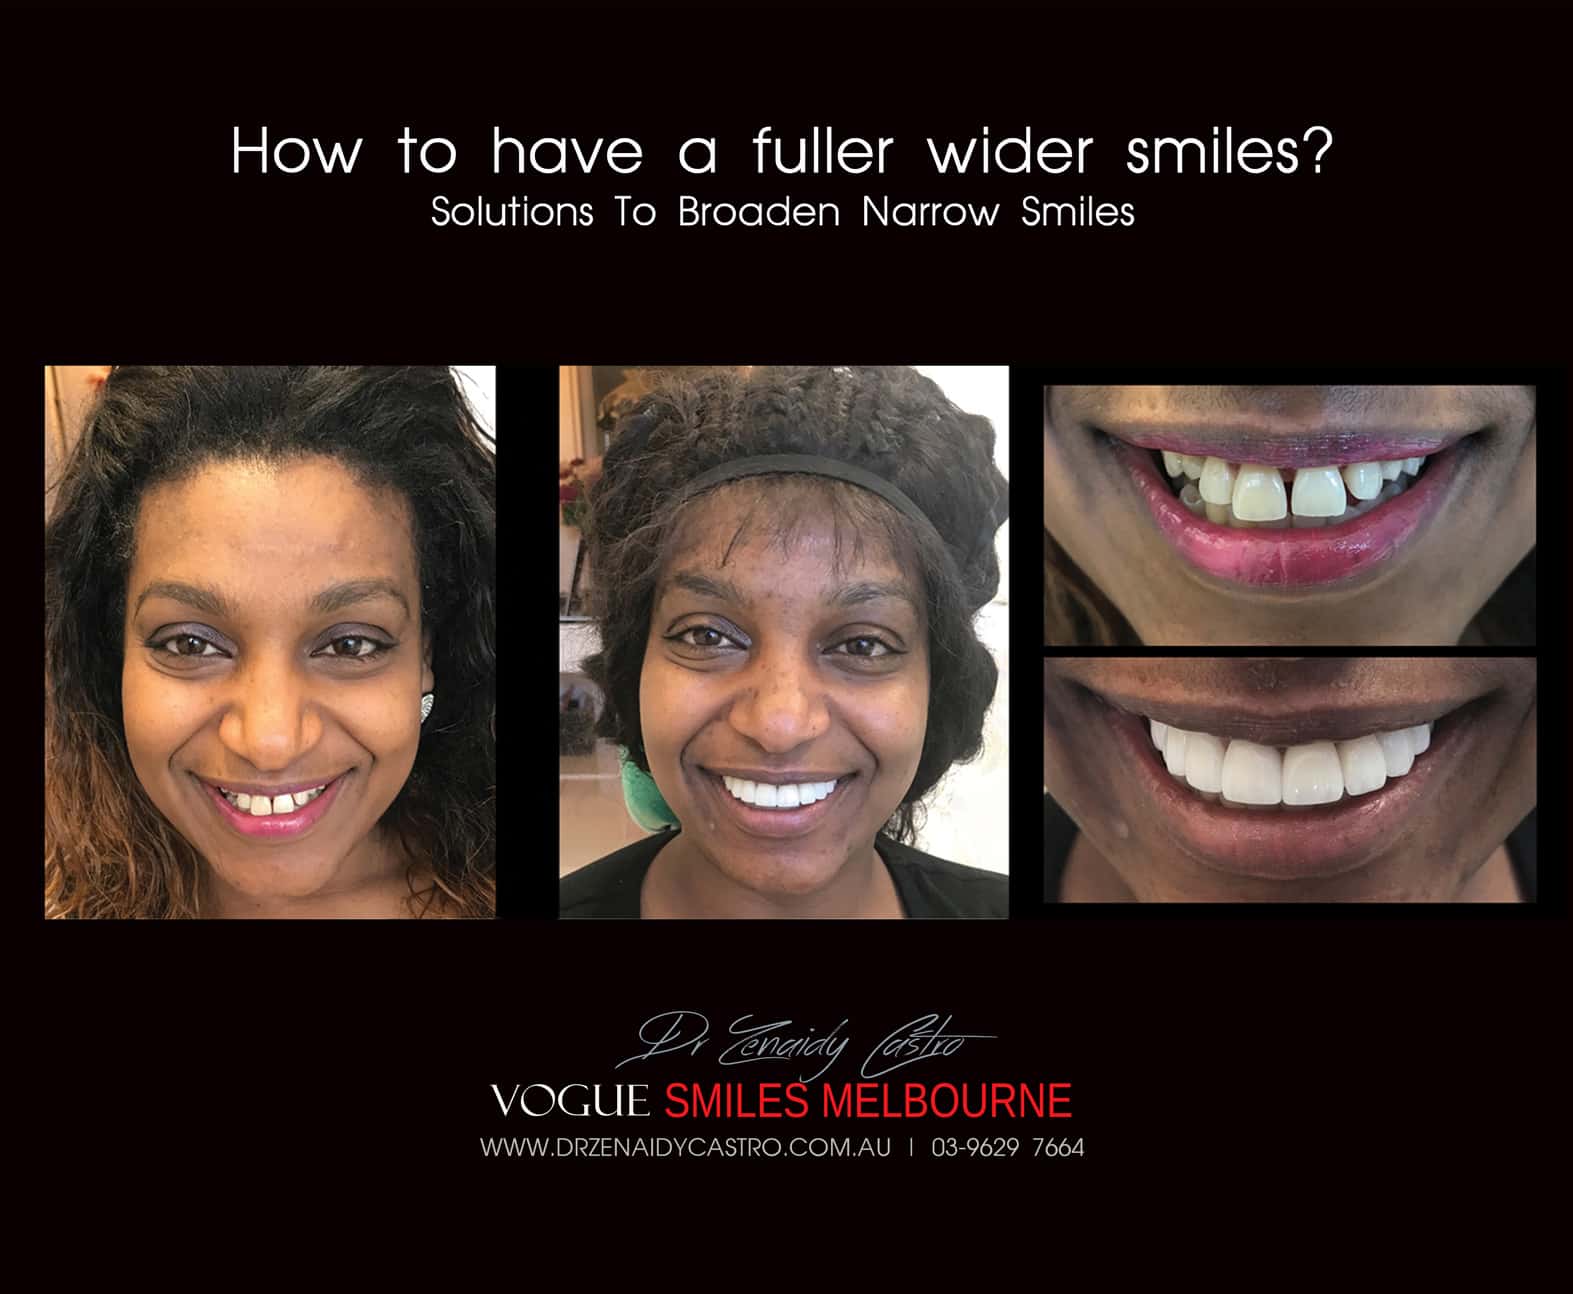 Porcelain Veneer to Widen Smile and Broaden Narrow Smiles for Fuller Smiles